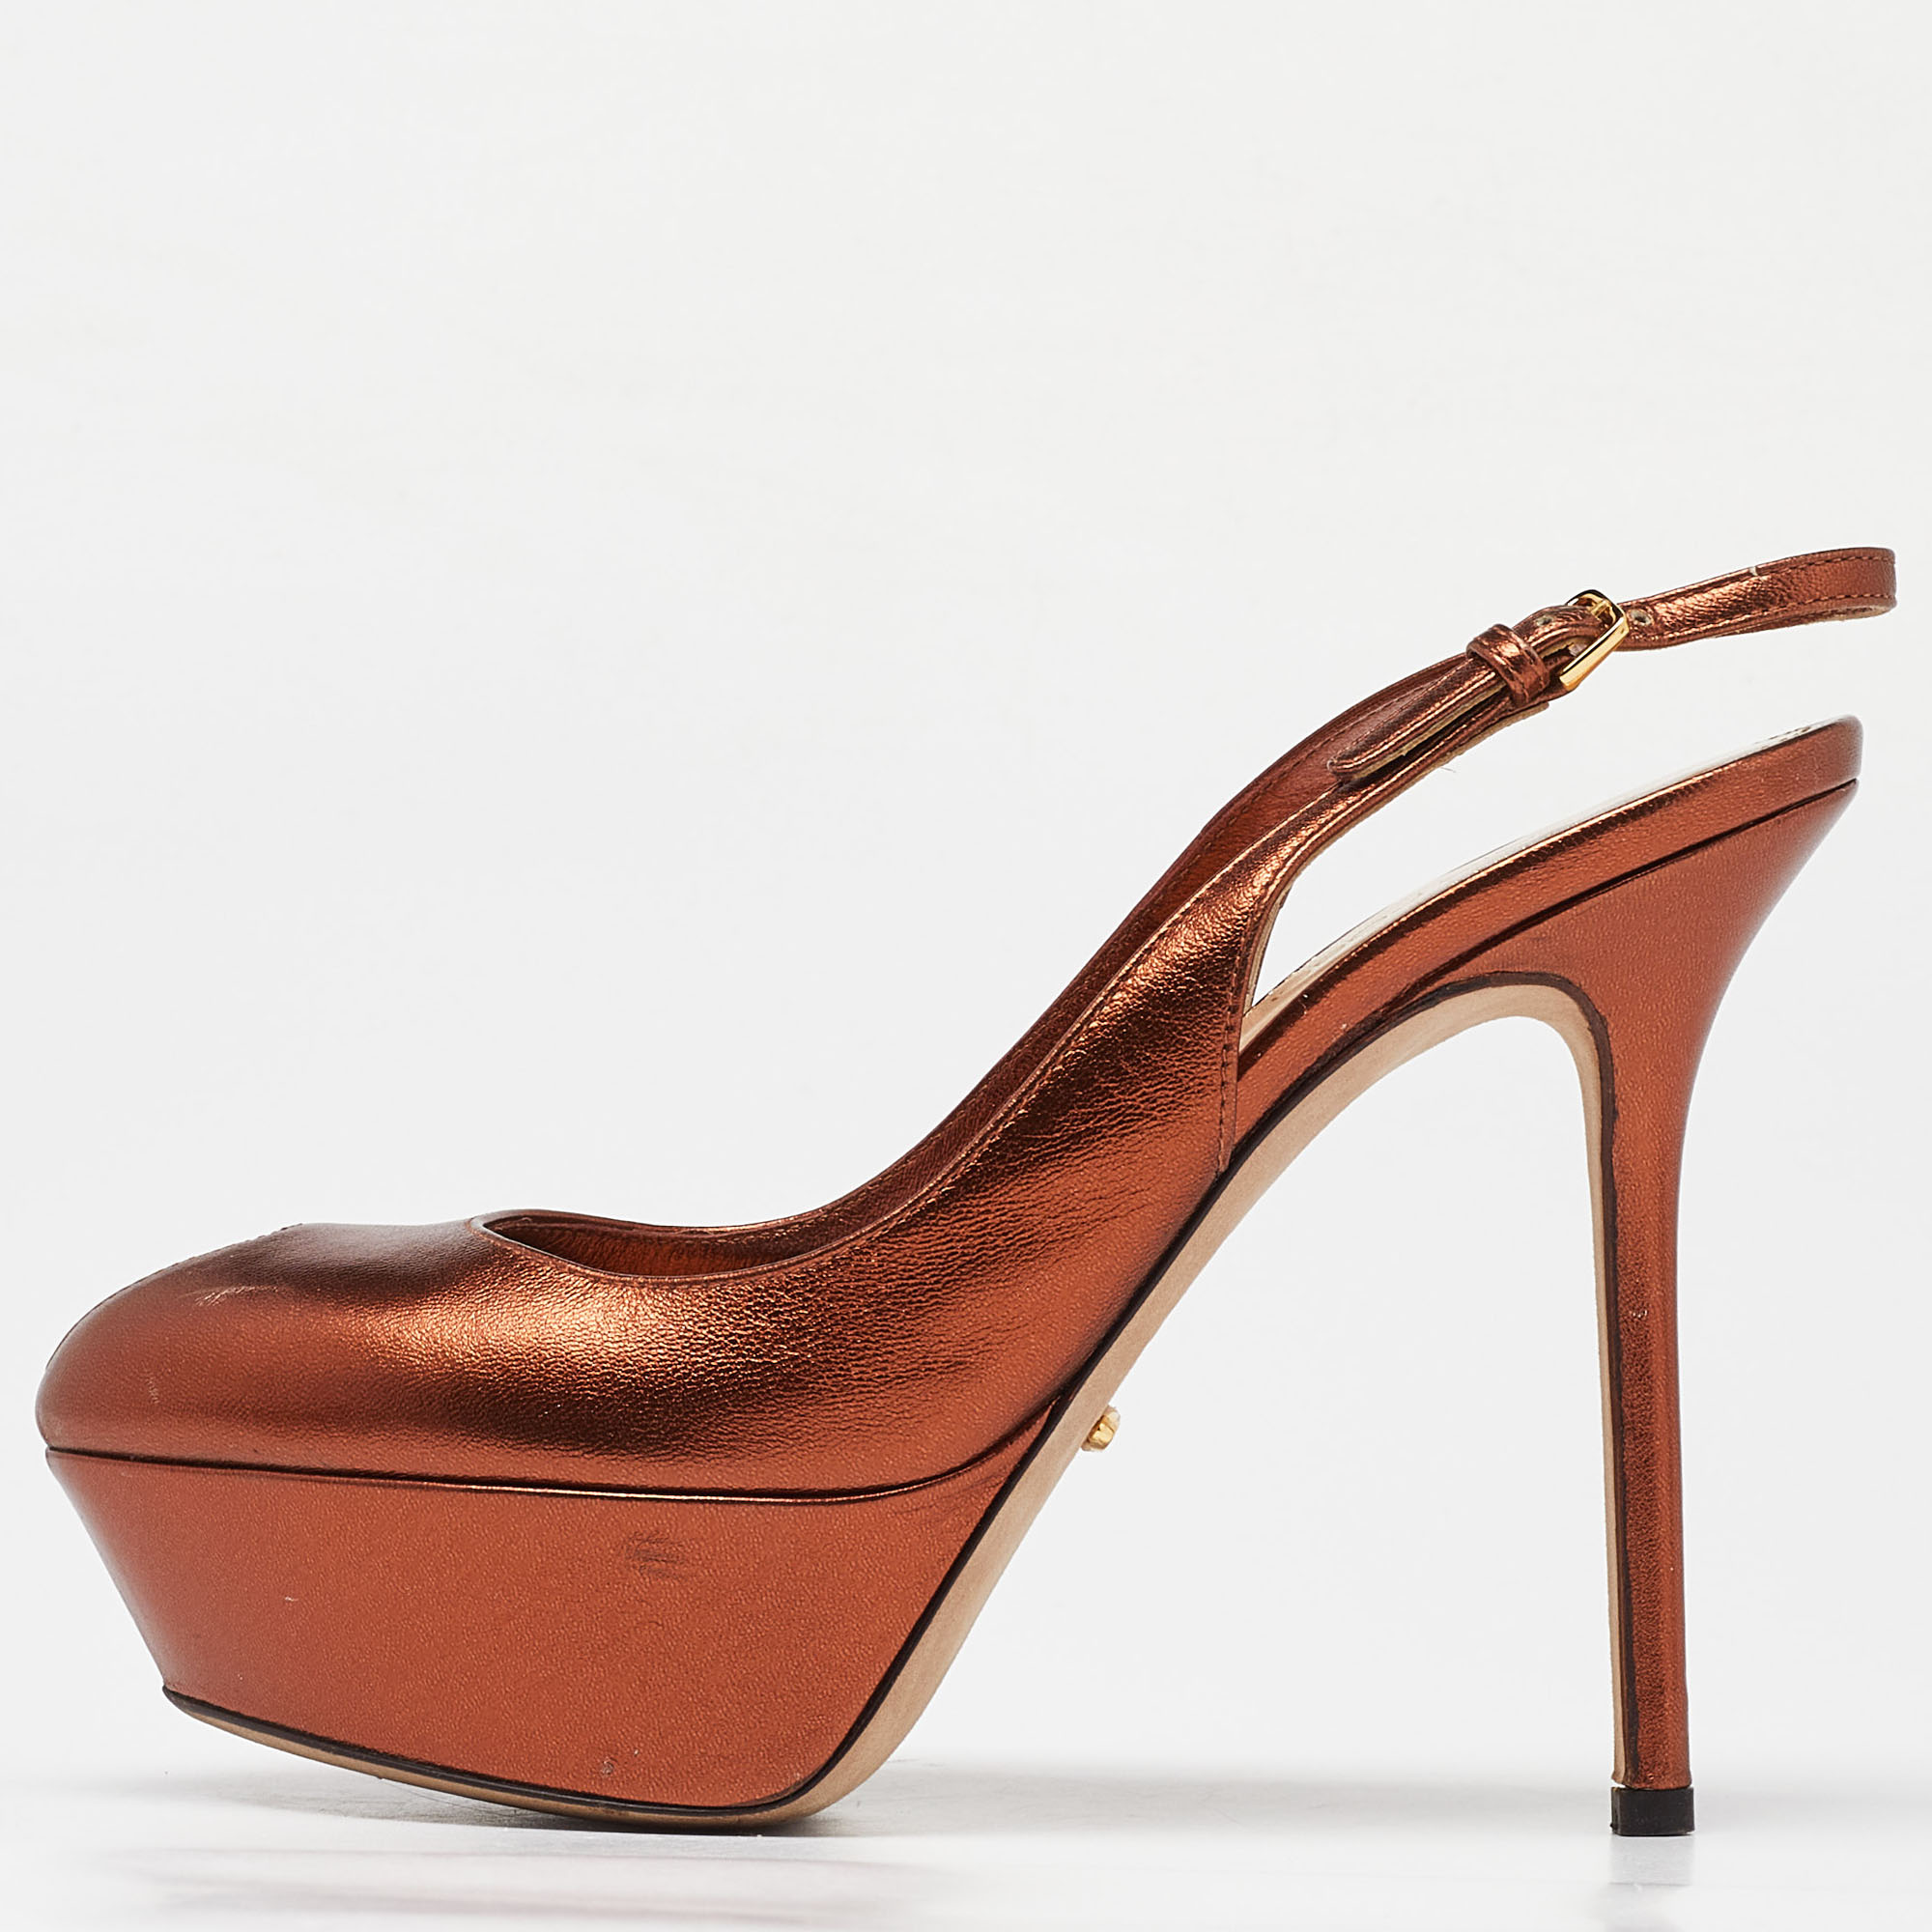 Sergio rossi metallic brown leather cachet peep toe platform slingback sandals size 36.5